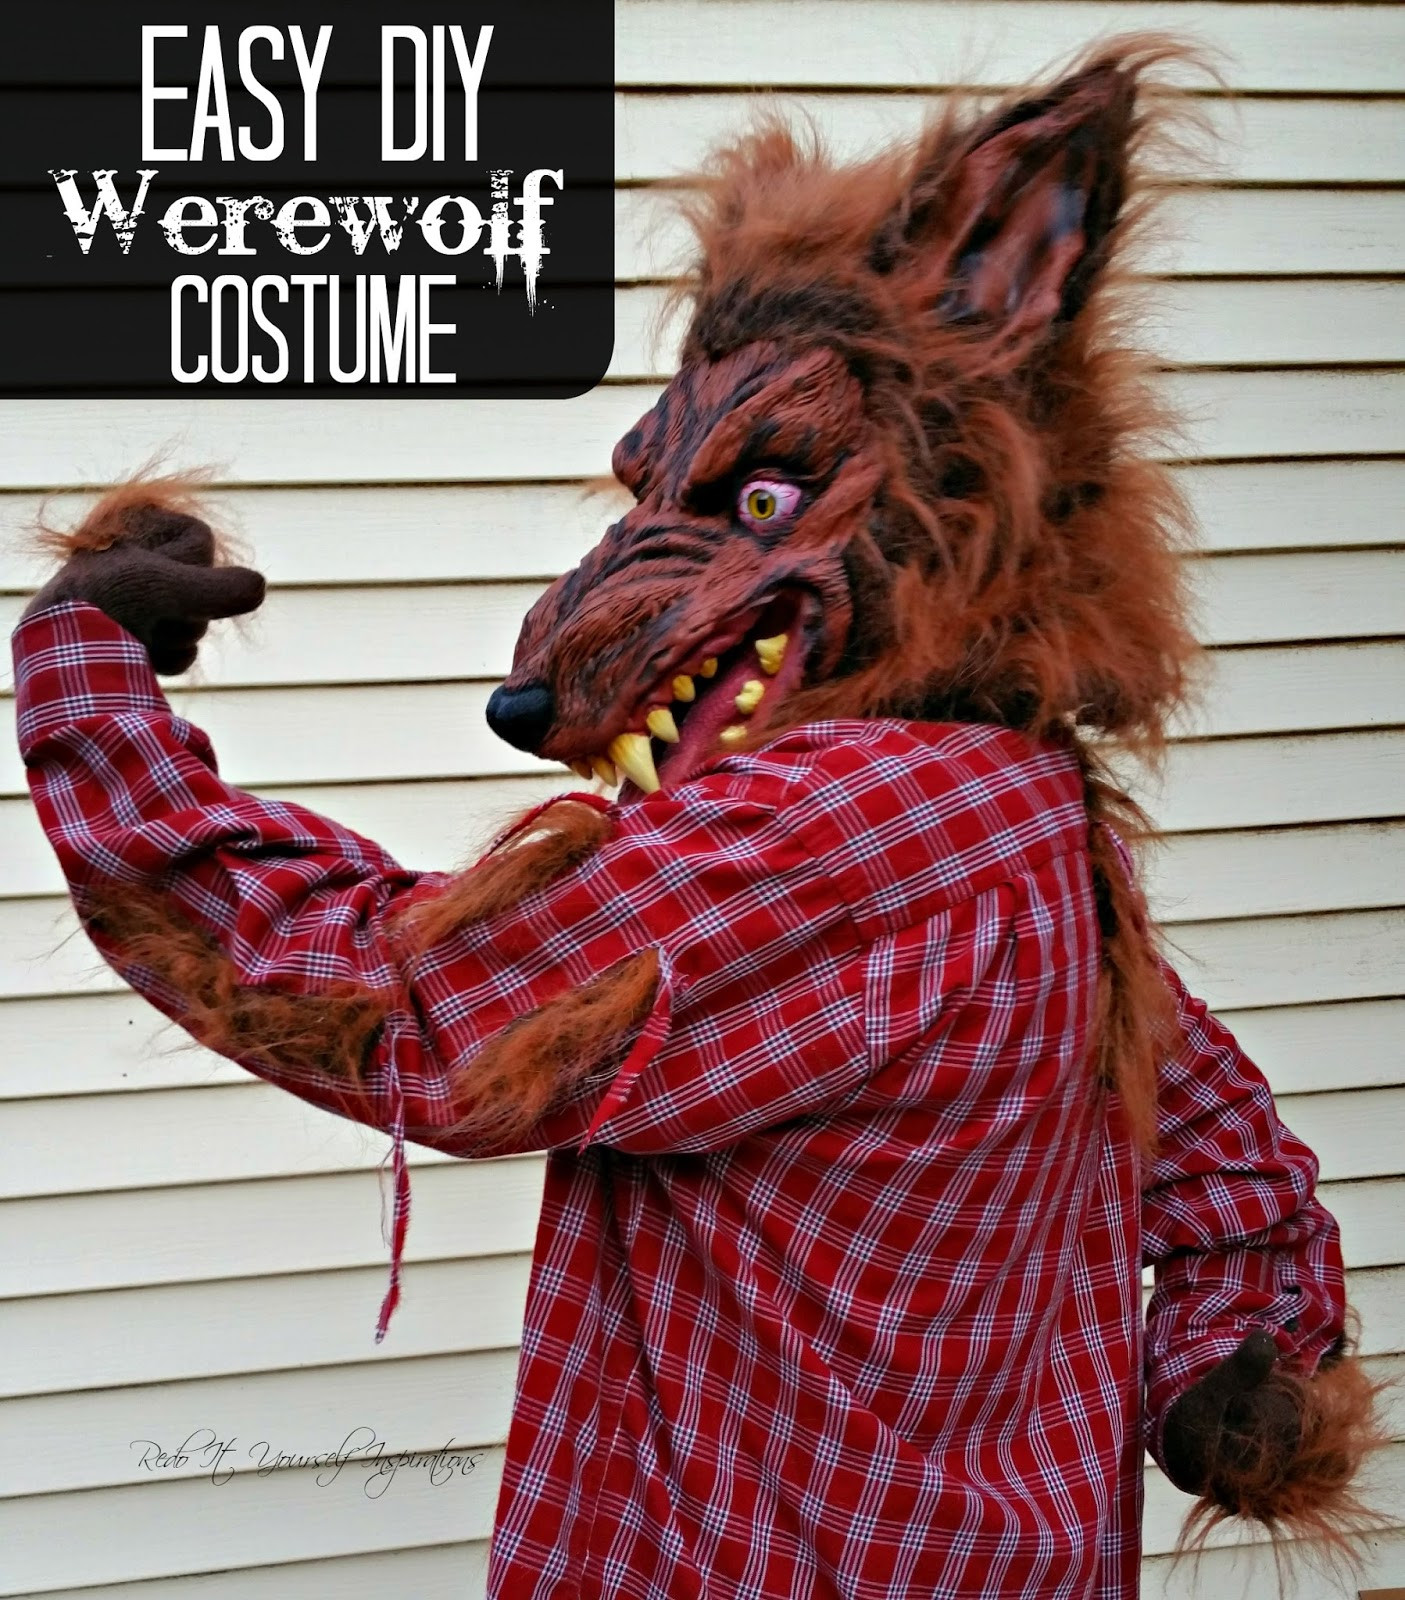 Best ideas about Werewolf Costume DIY
. Save or Pin Easy DIY Werewolf Costume Now.